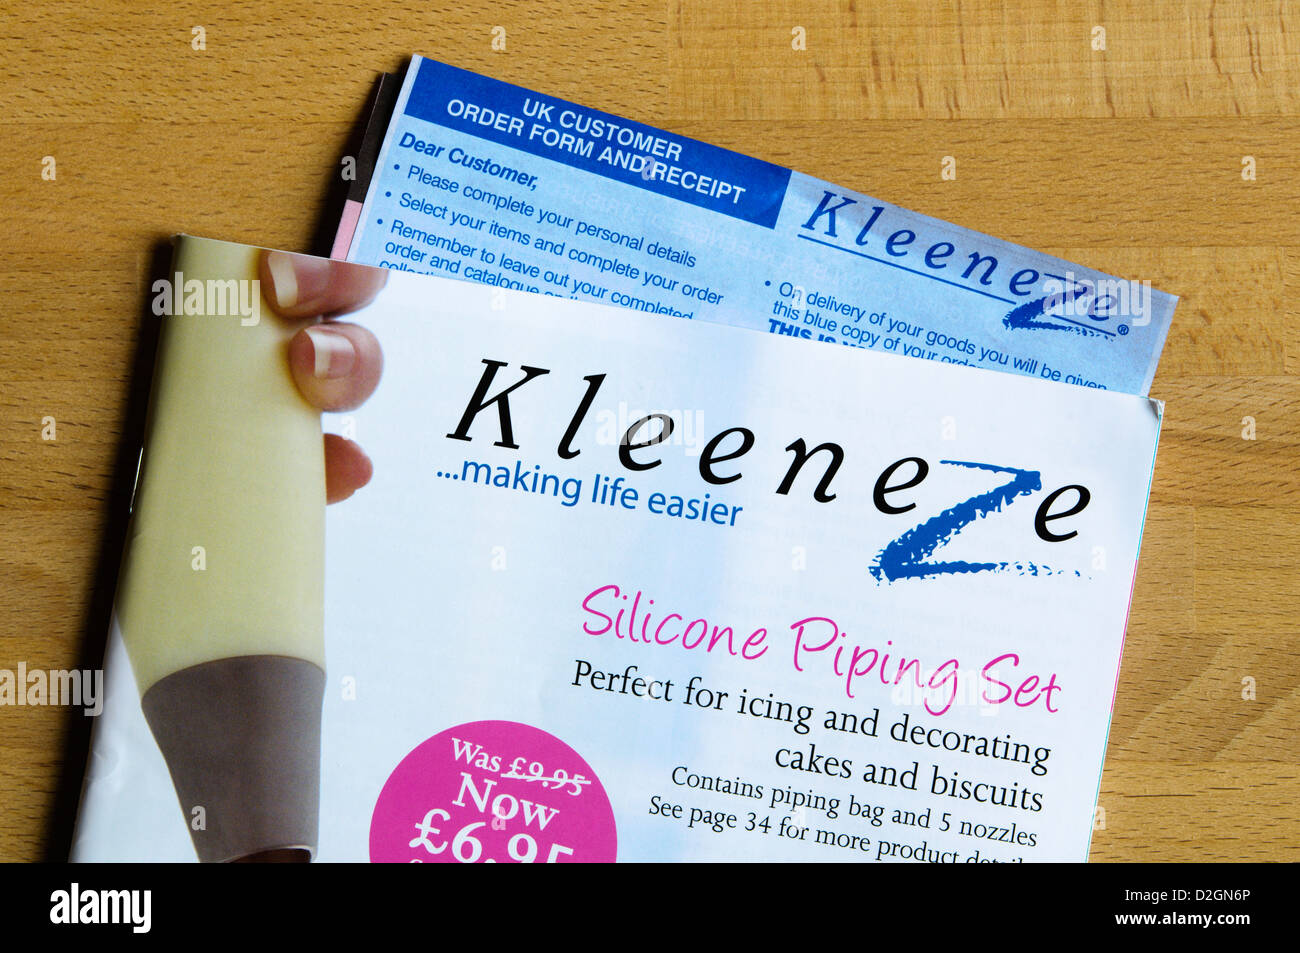 A Kleeneze catalogue. Stock Photo